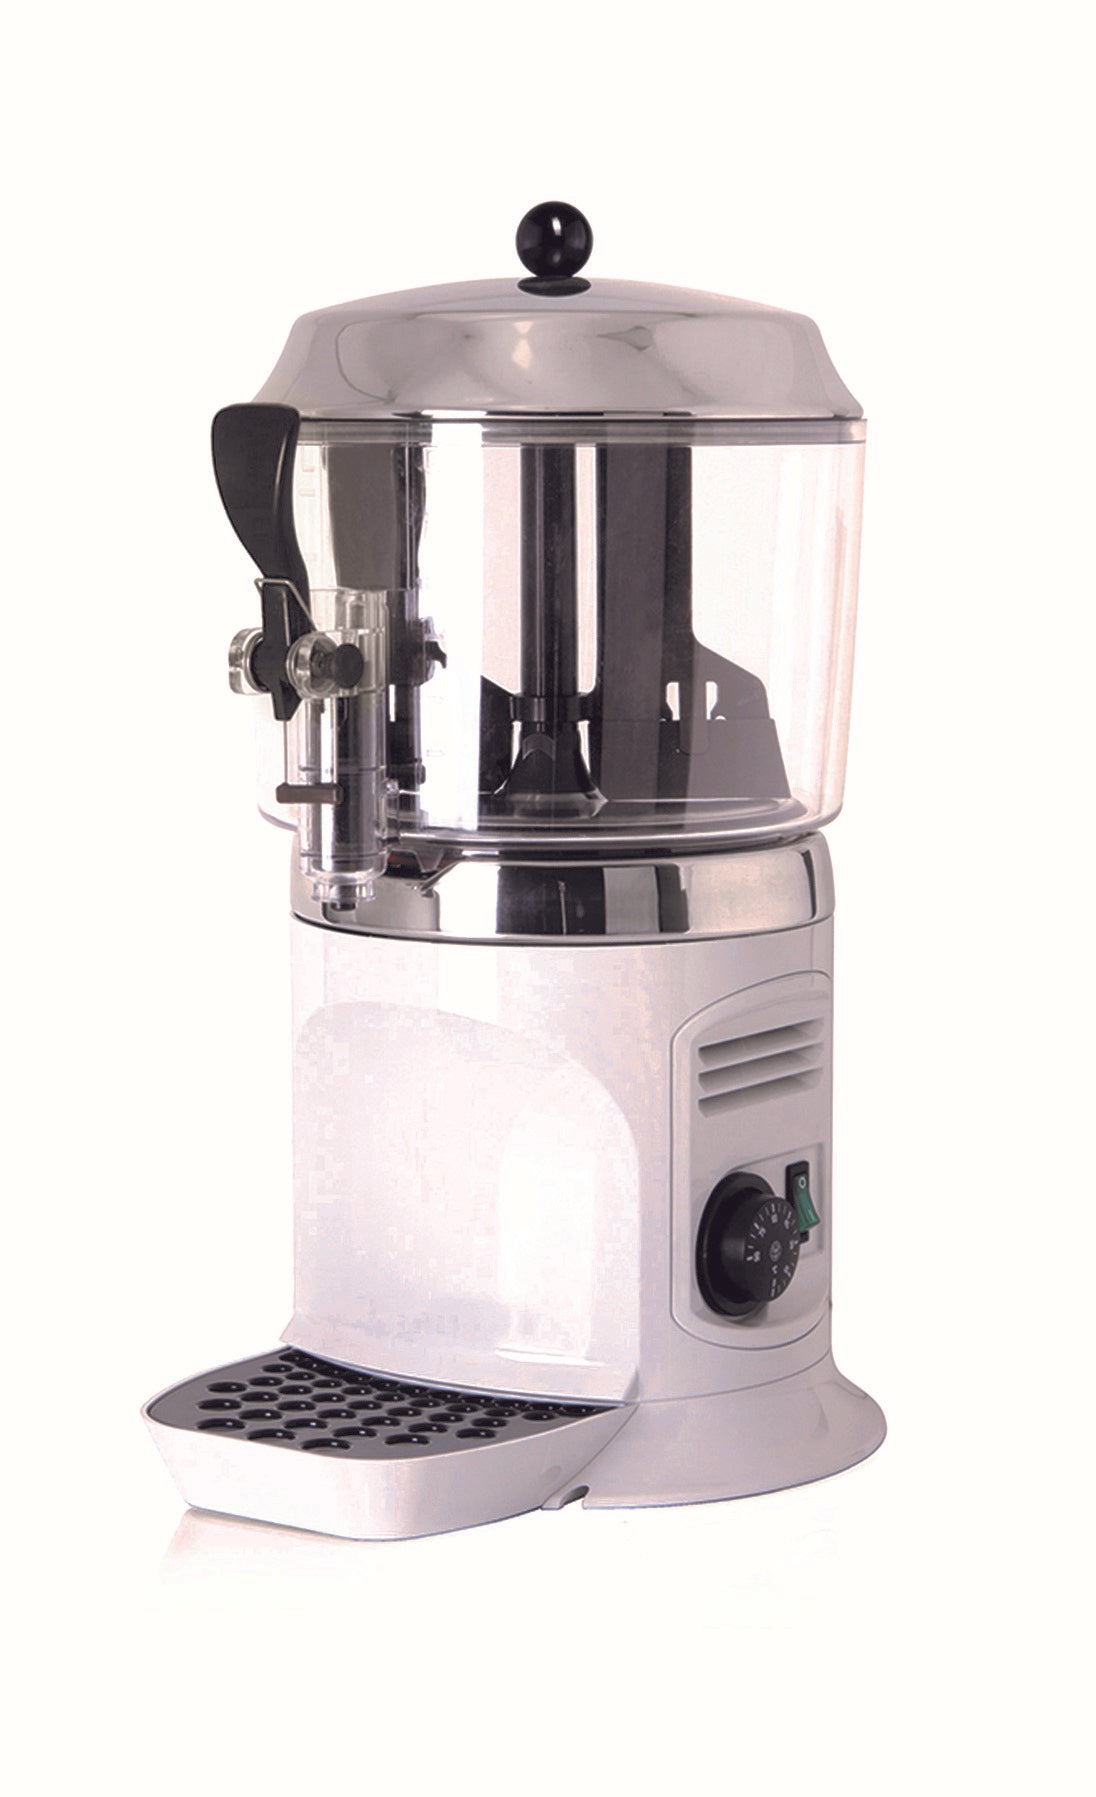 CHOC5W -Hot beverage dispenser 1.32 Gal white color